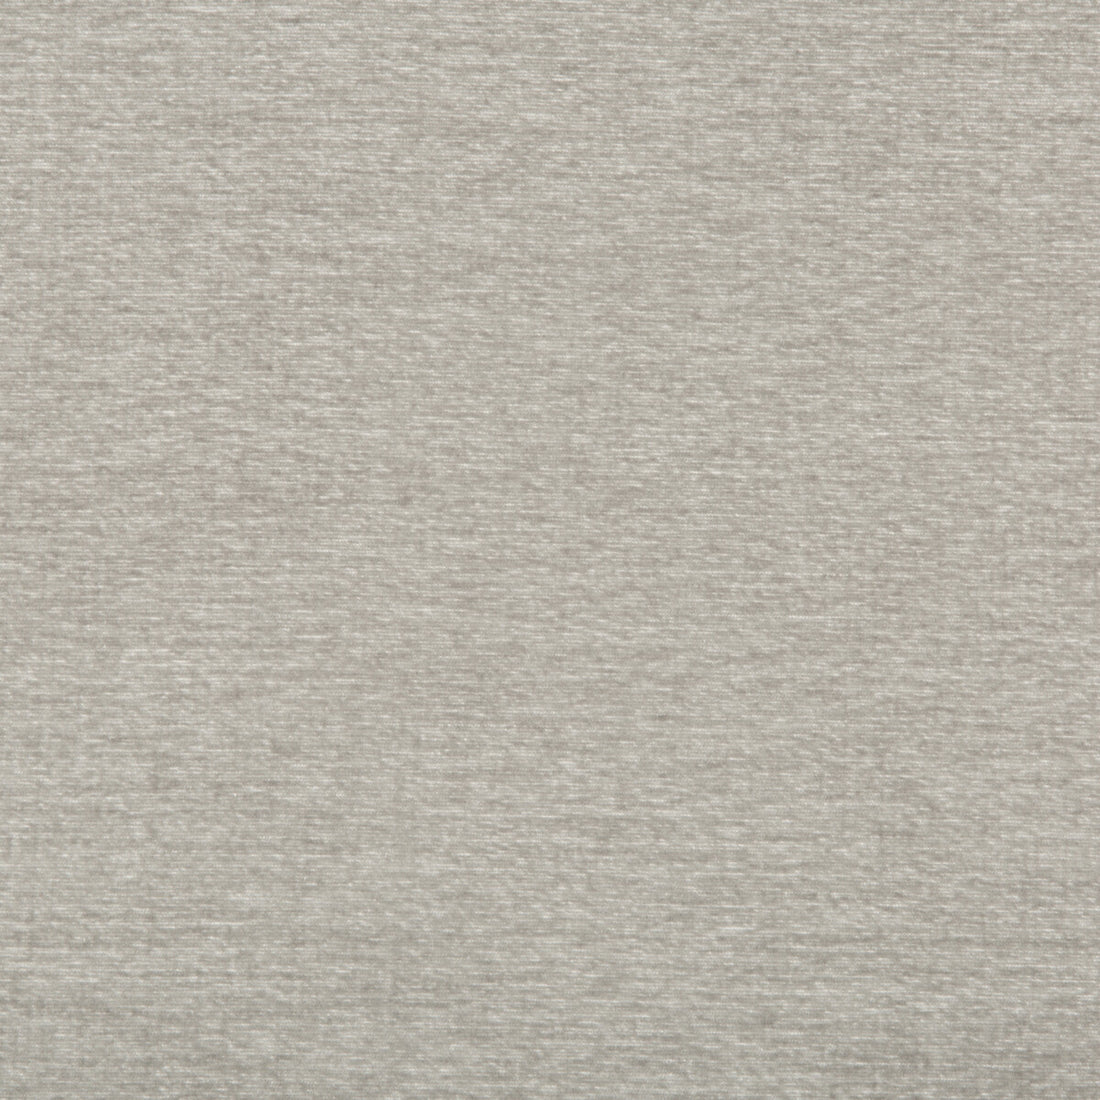 Kravet Smart fabric in 35323-11 color - pattern 35323.11.0 - by Kravet Smart in the Performance Kravetarmor collection